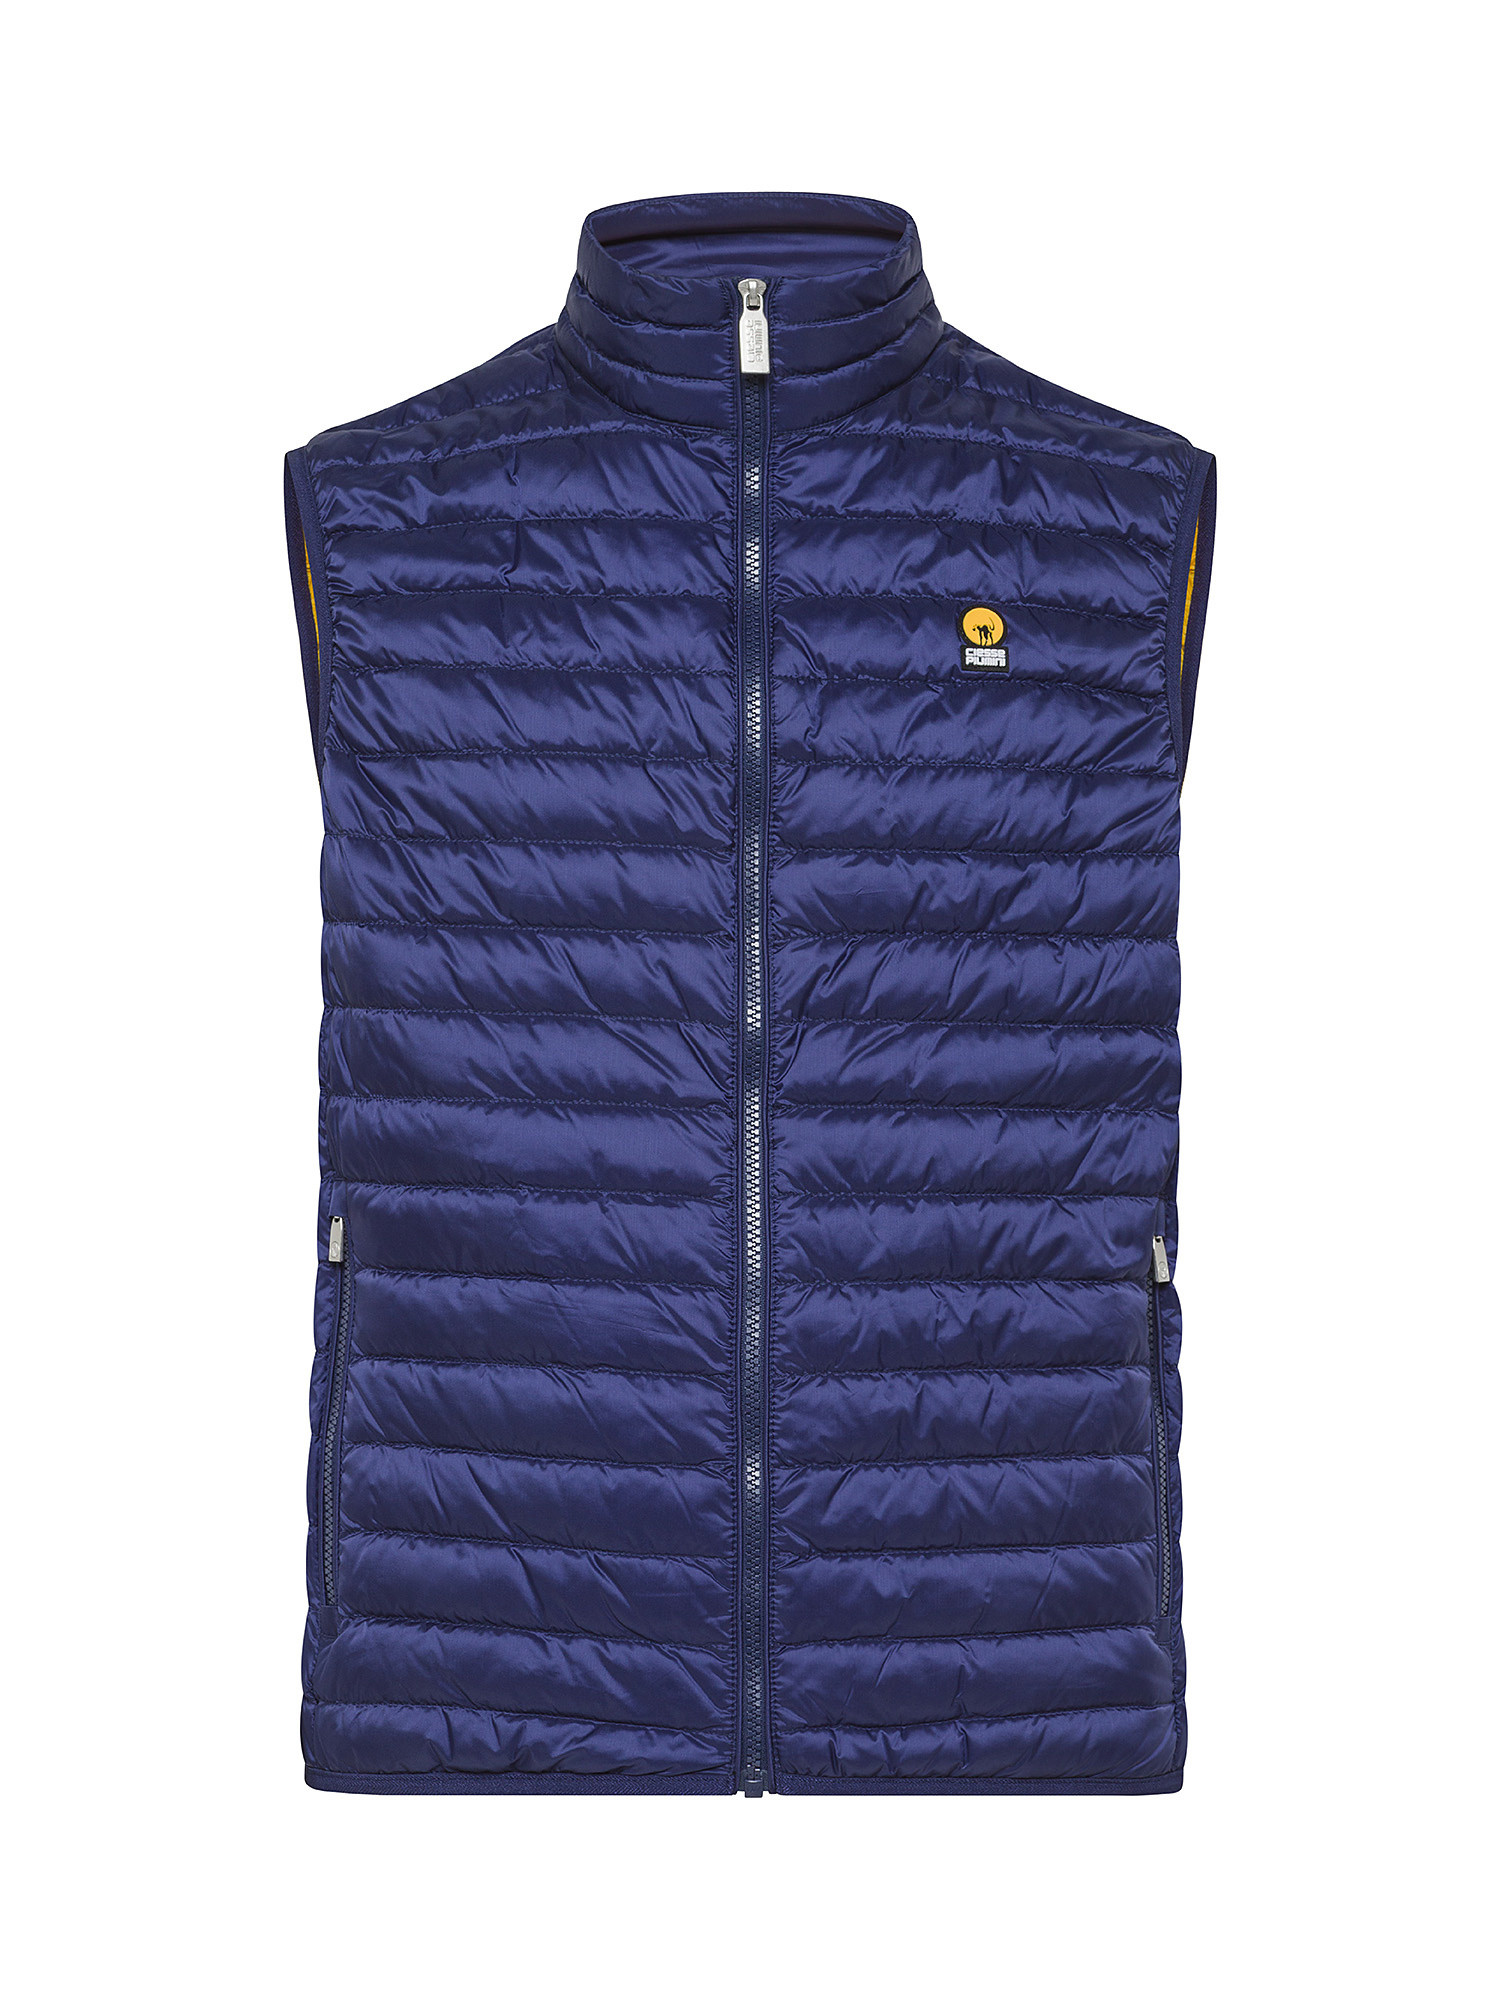 Ciesse Piumini - Melvin vest in nylon, Blue, large image number 0